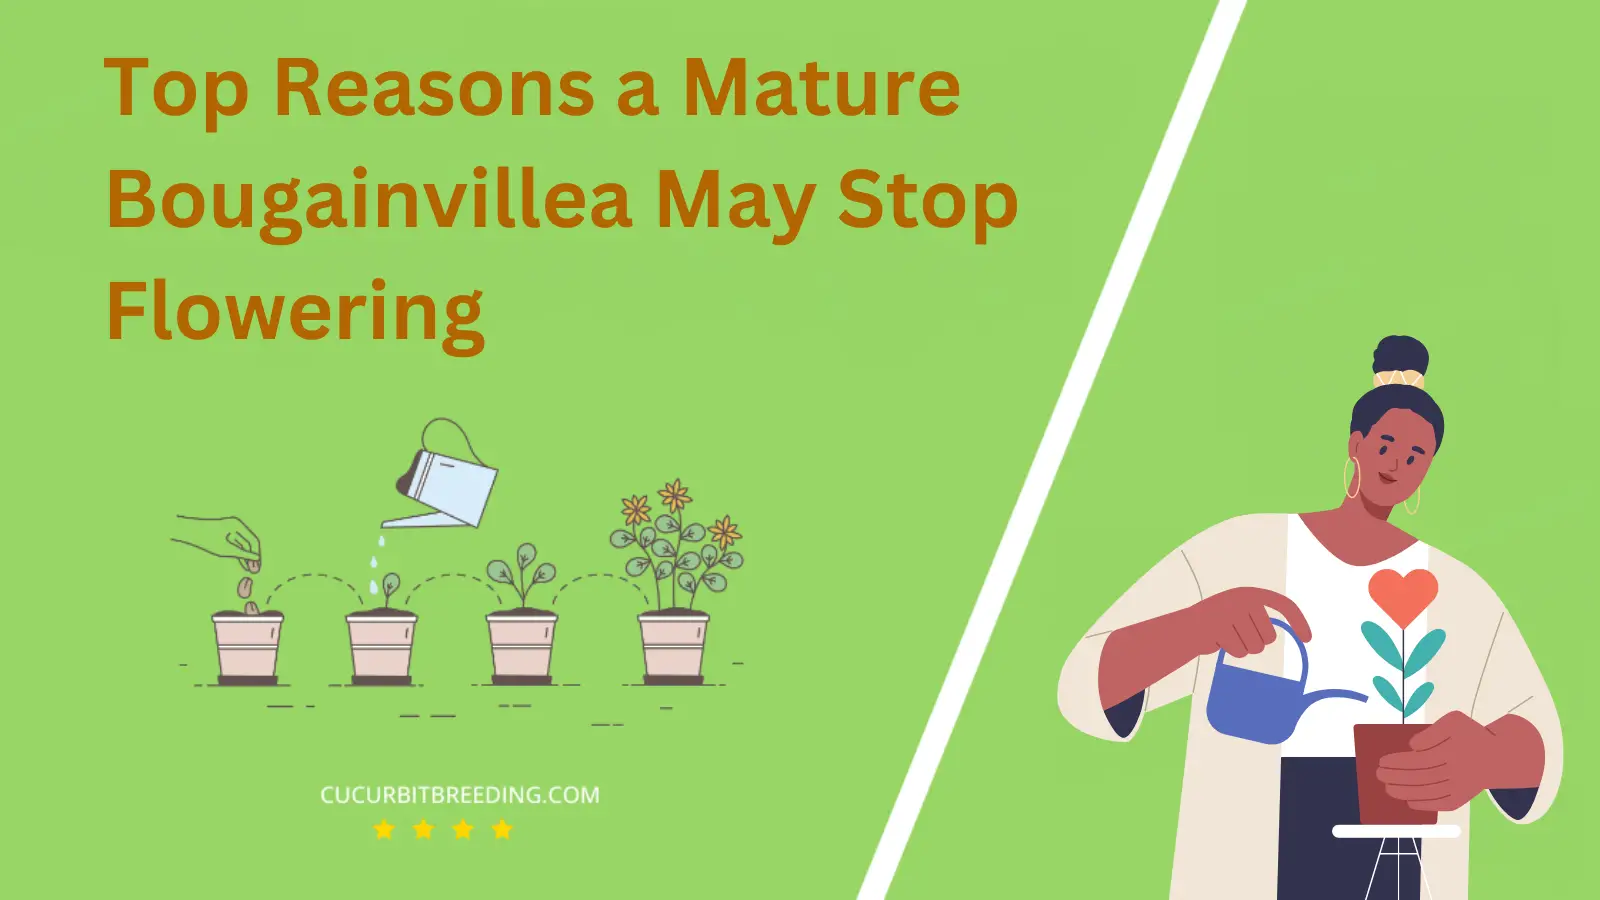 Top Reasons a Mature Bougainvillea May Stop Flowering